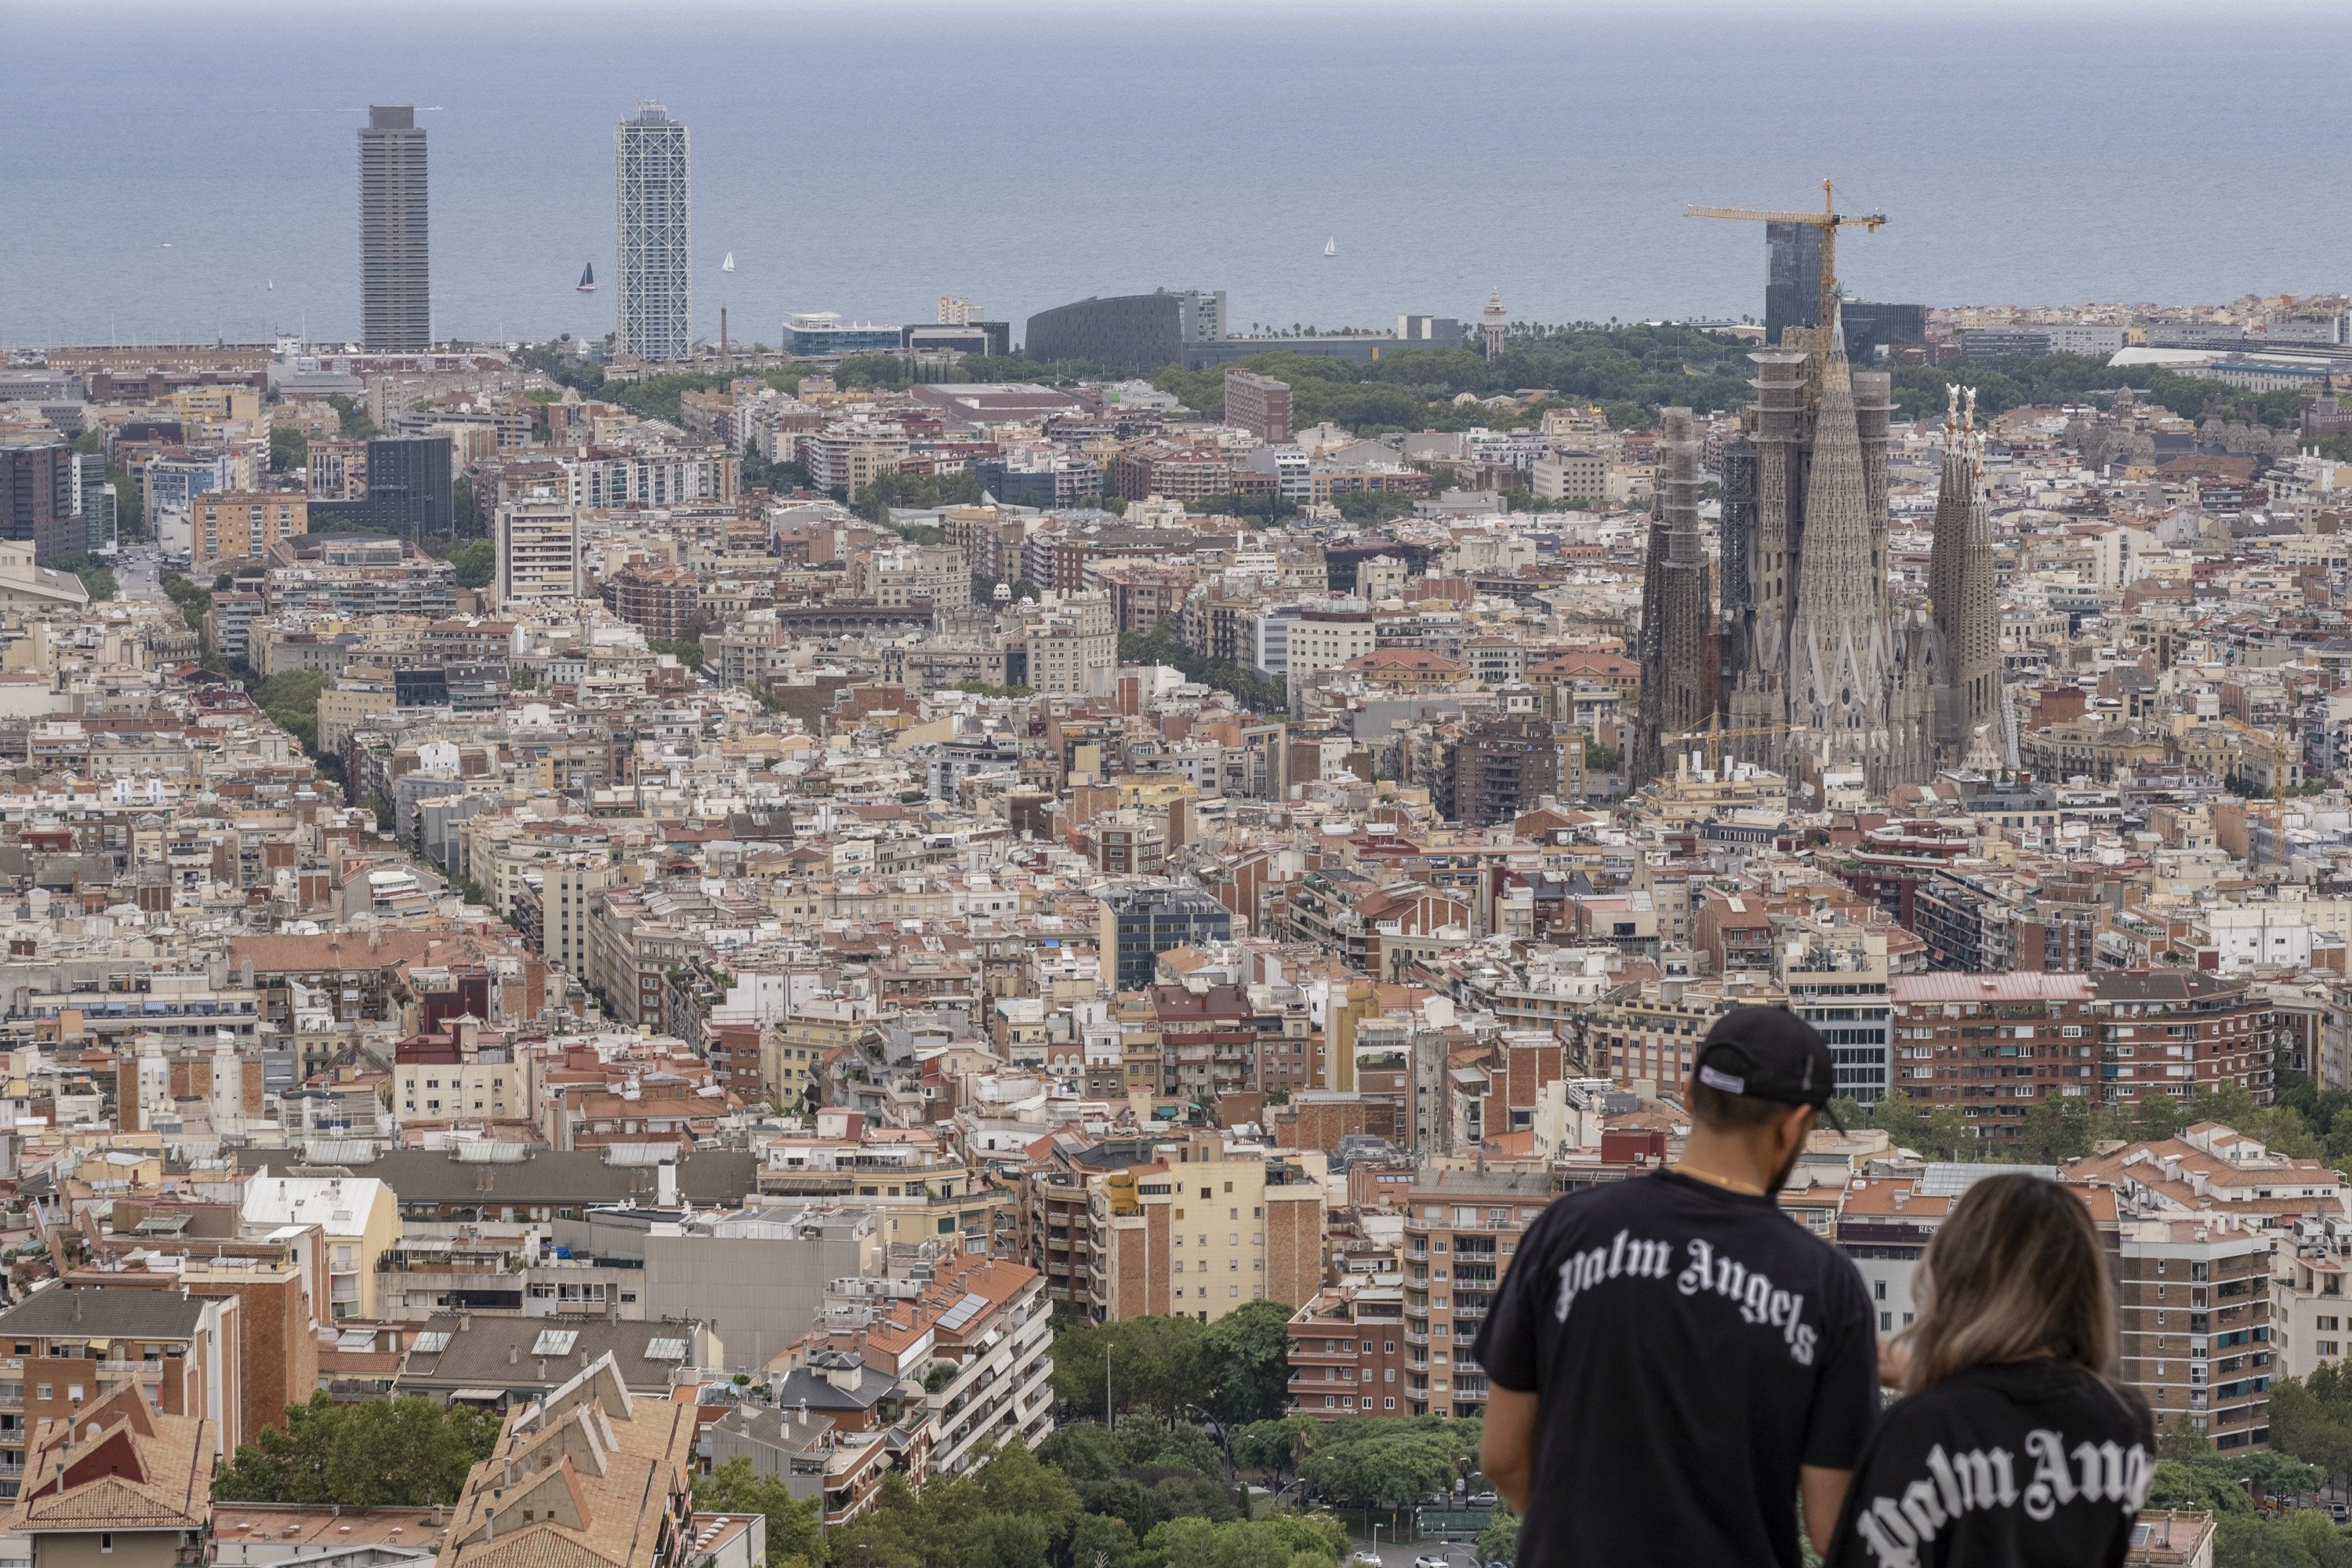 Recurs vistes Barcelona edificis, economia, venda, lloguer, habitatge turistes / Foto: Carlos Baglietto